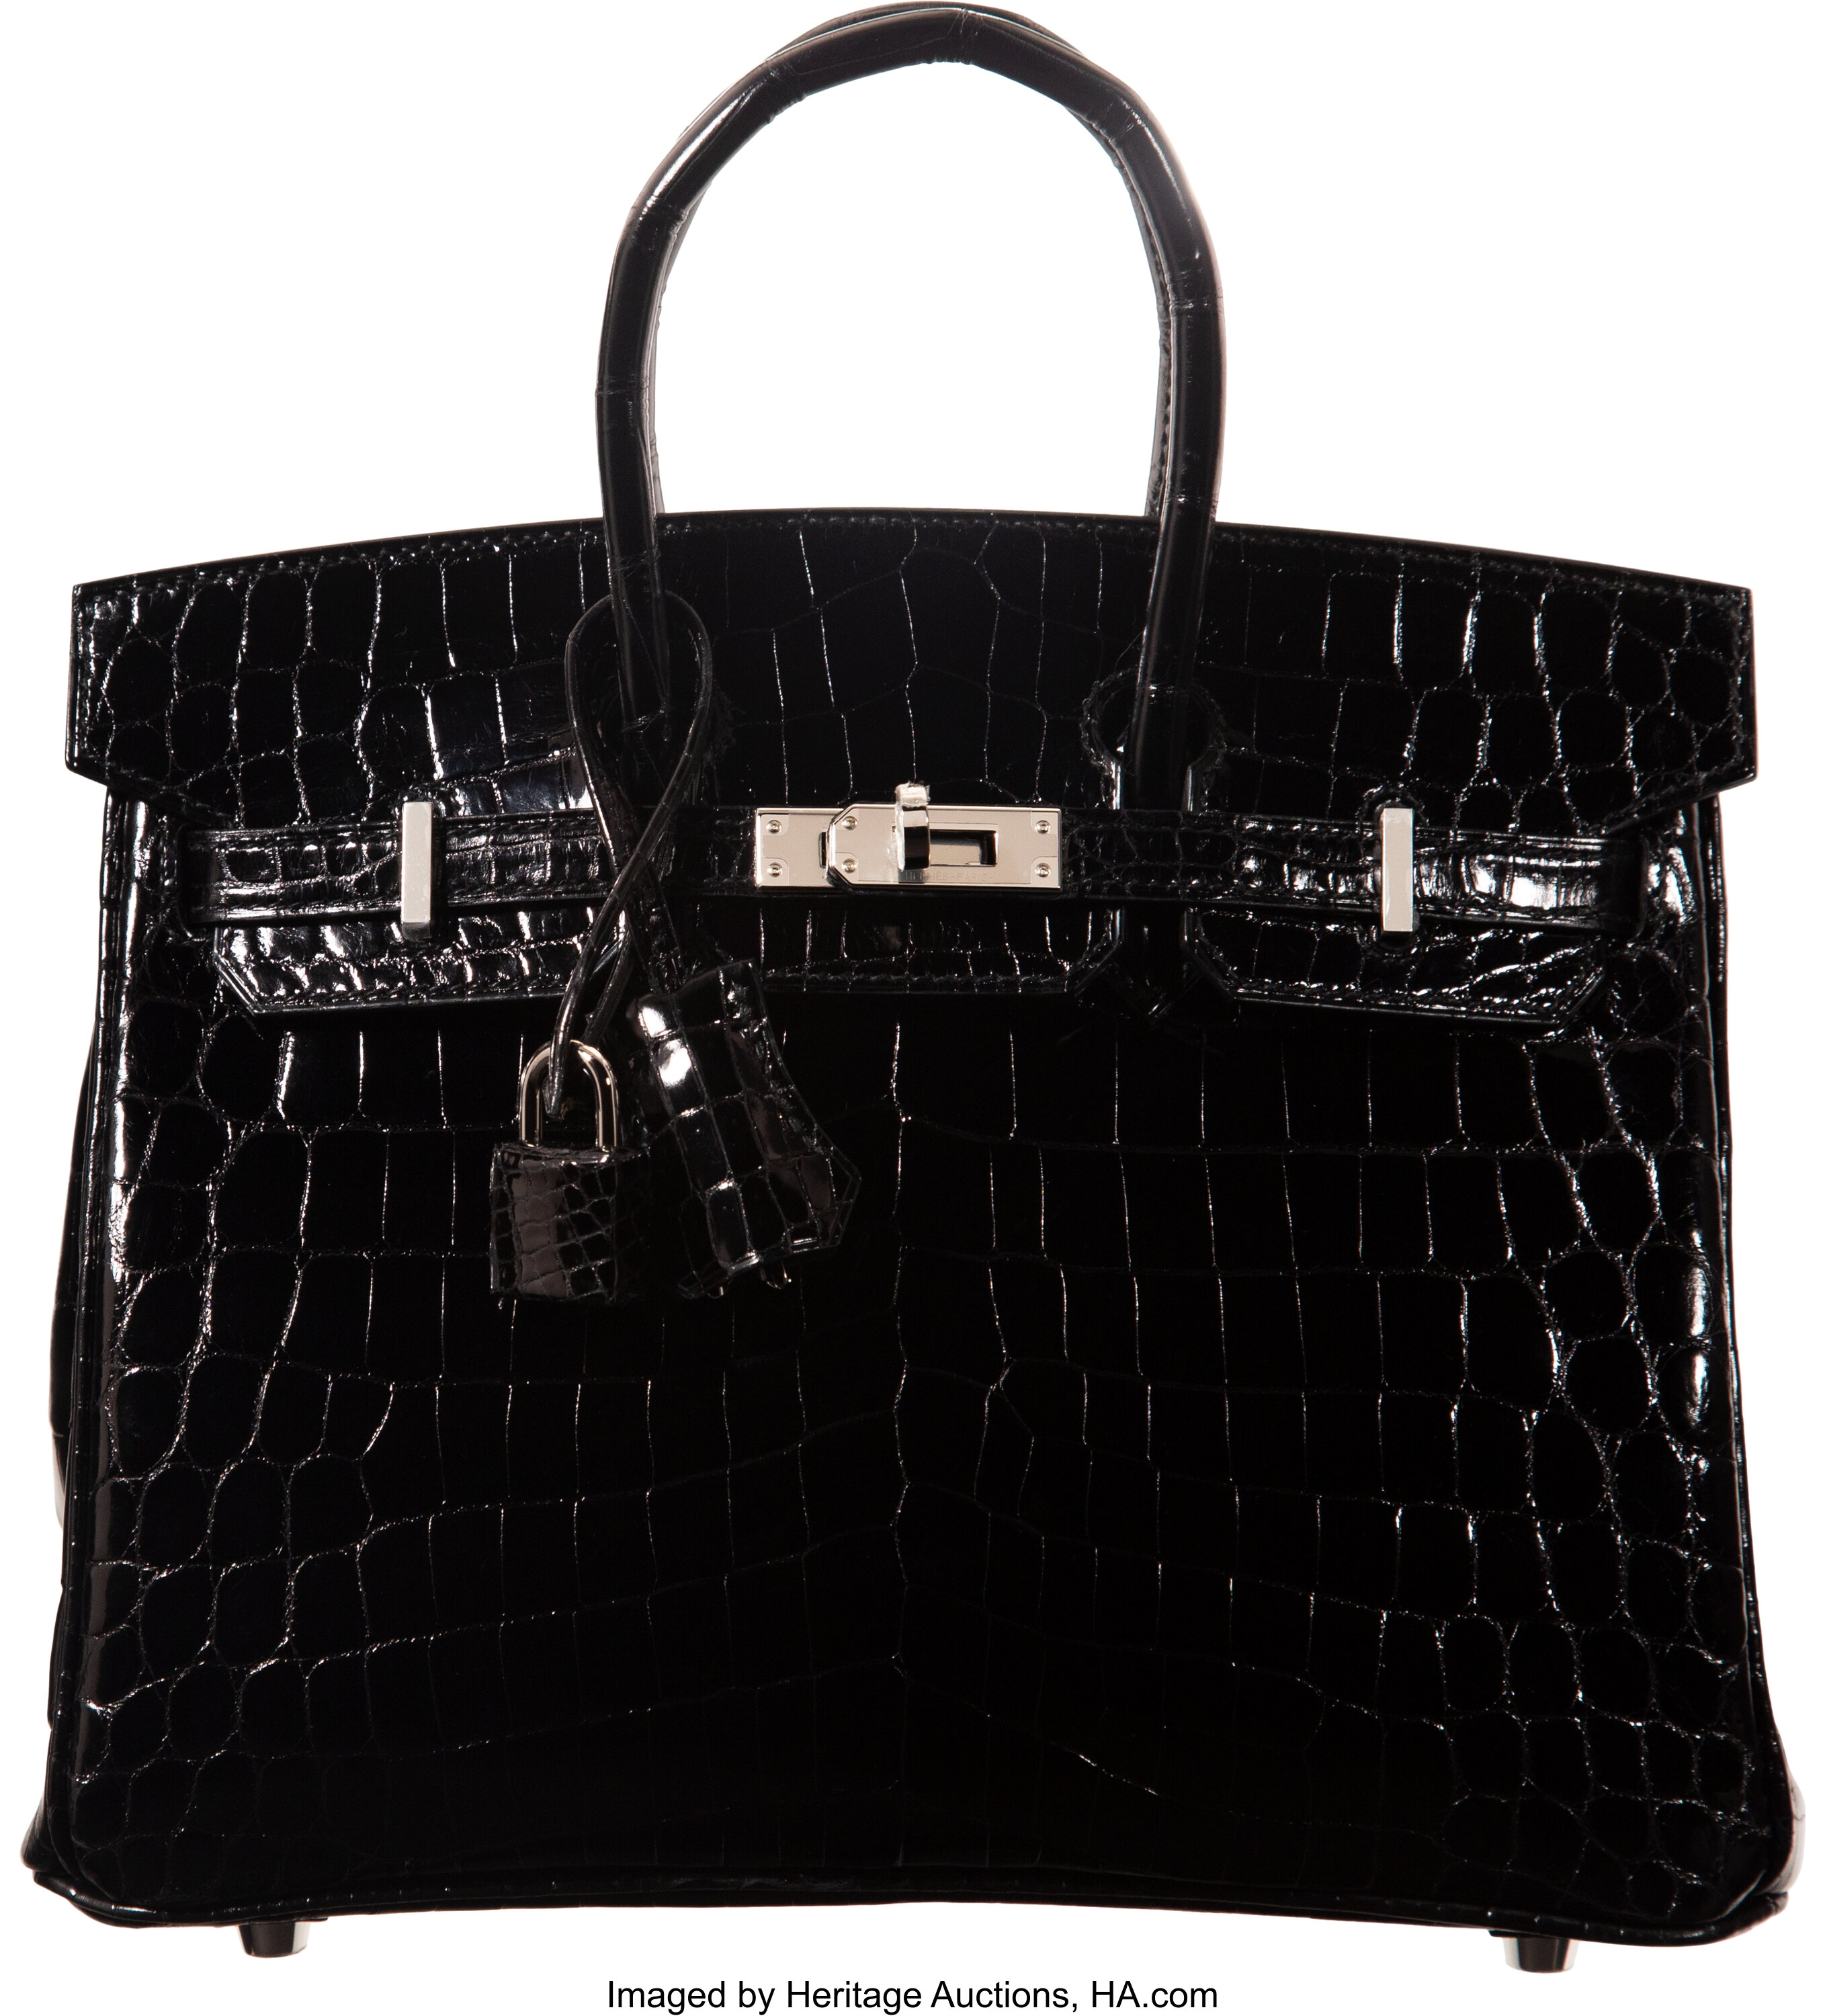 Hermès 25cm Shiny Black Niloticus Crocodile Birkin Bag with